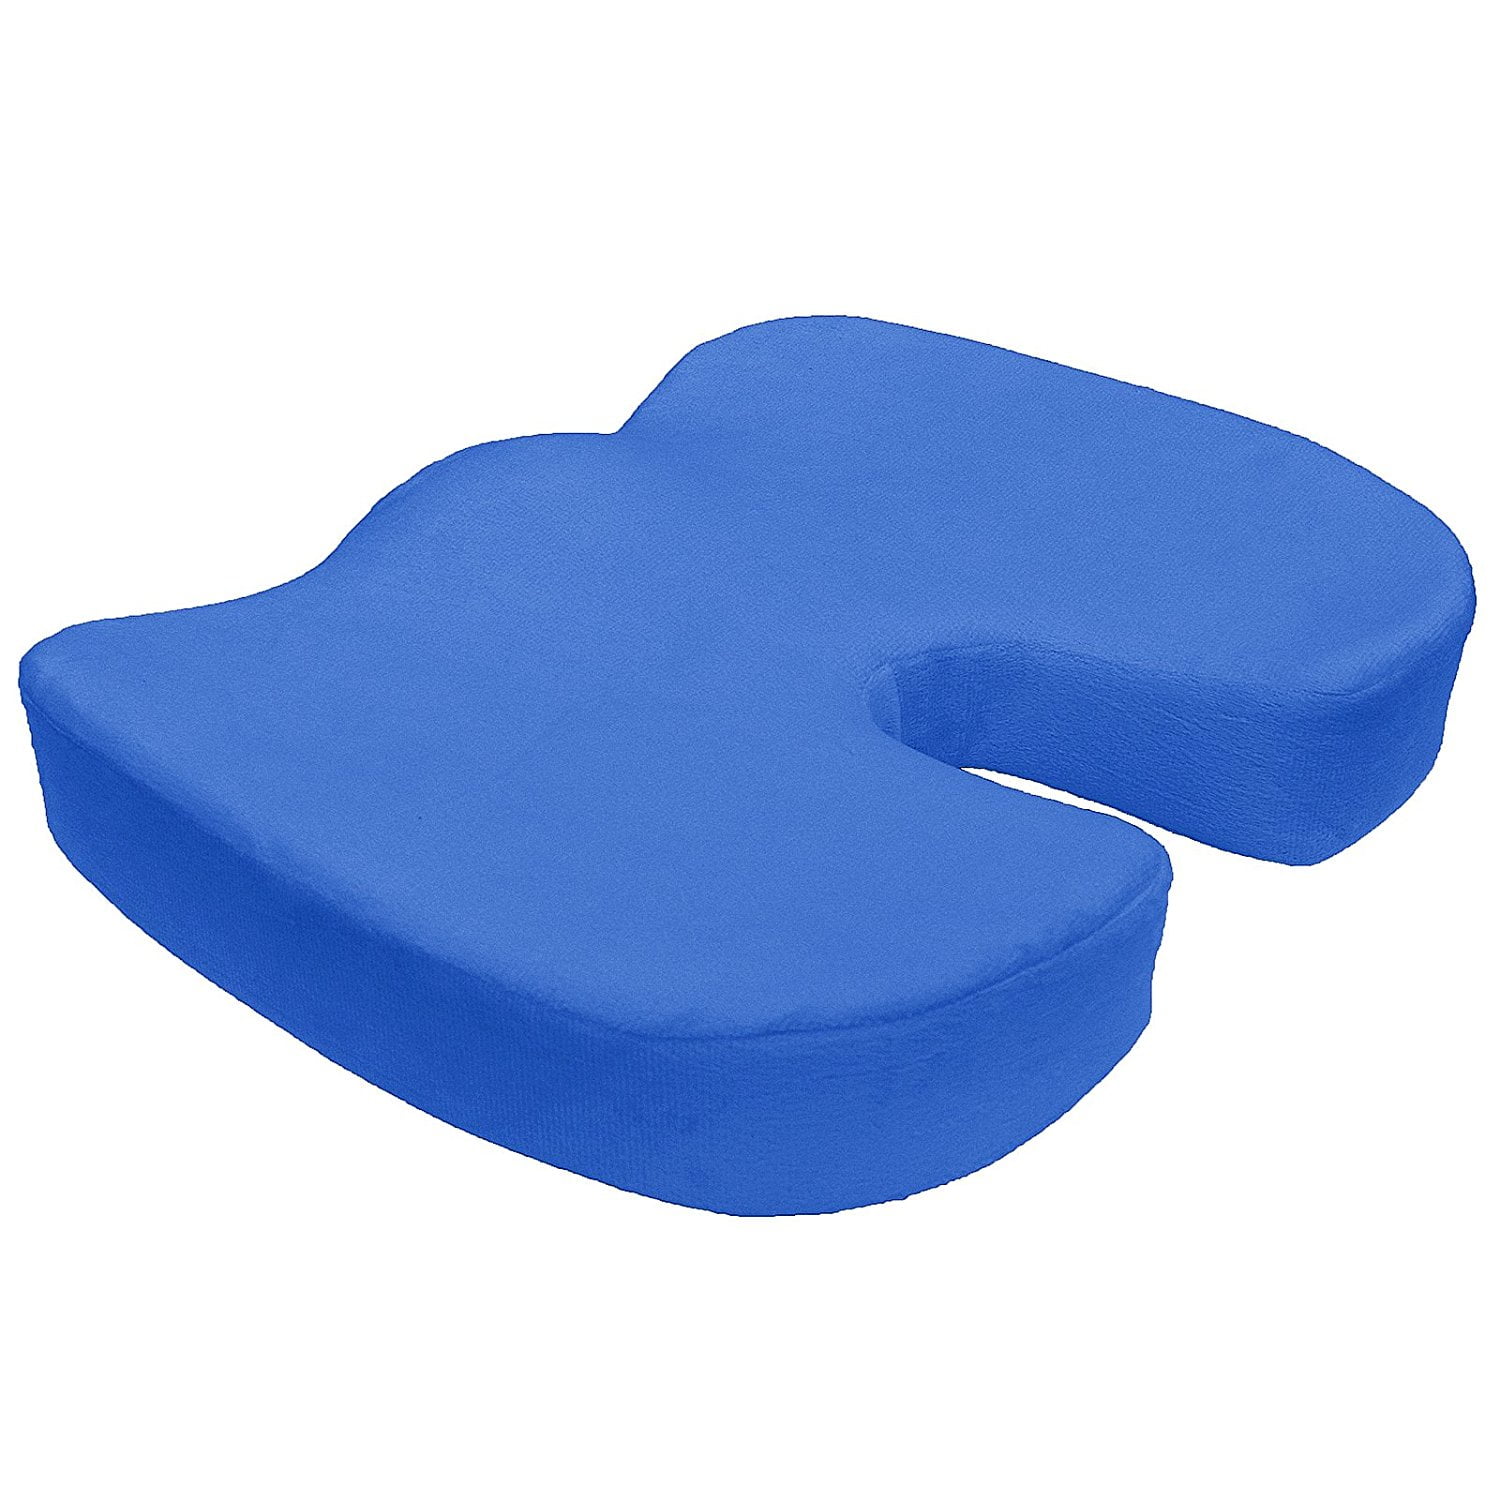 Hip Support MEMORY FOAM Coccyx Seat Cushion, Size: Medium